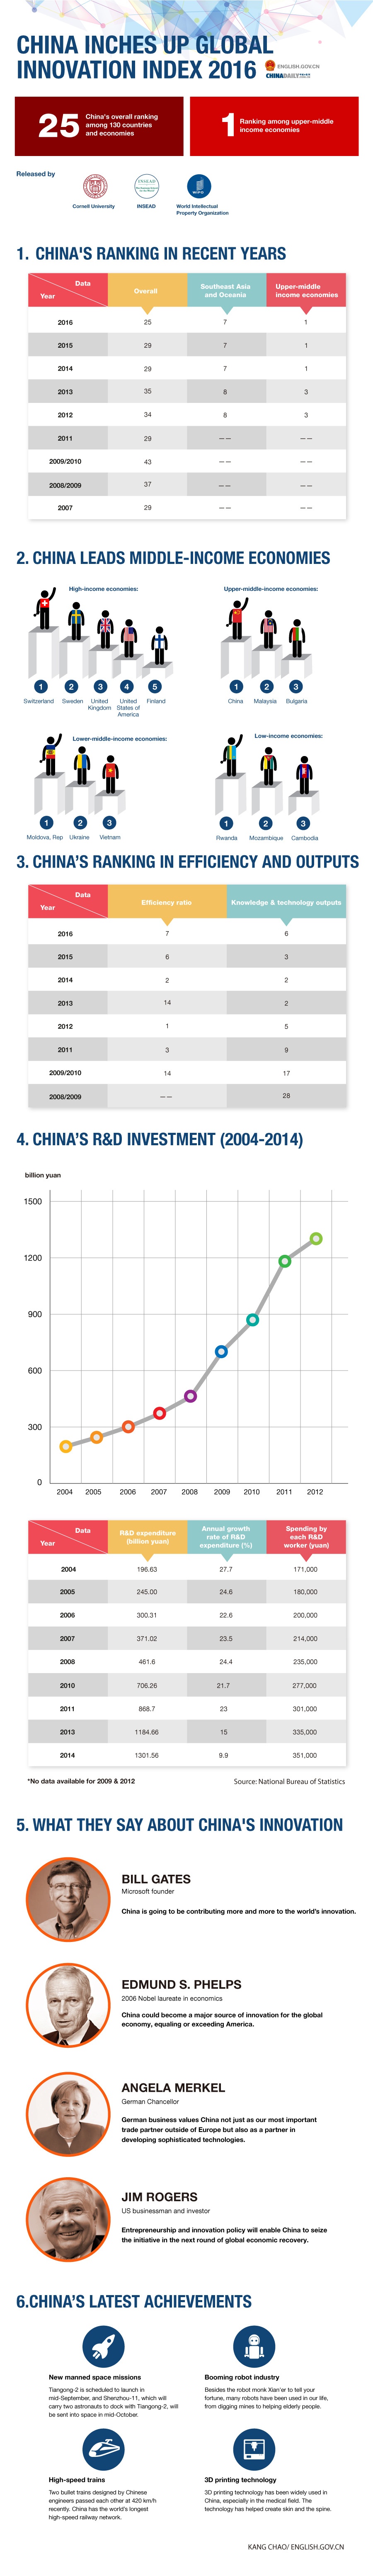 China Innovation Ranking Infographic